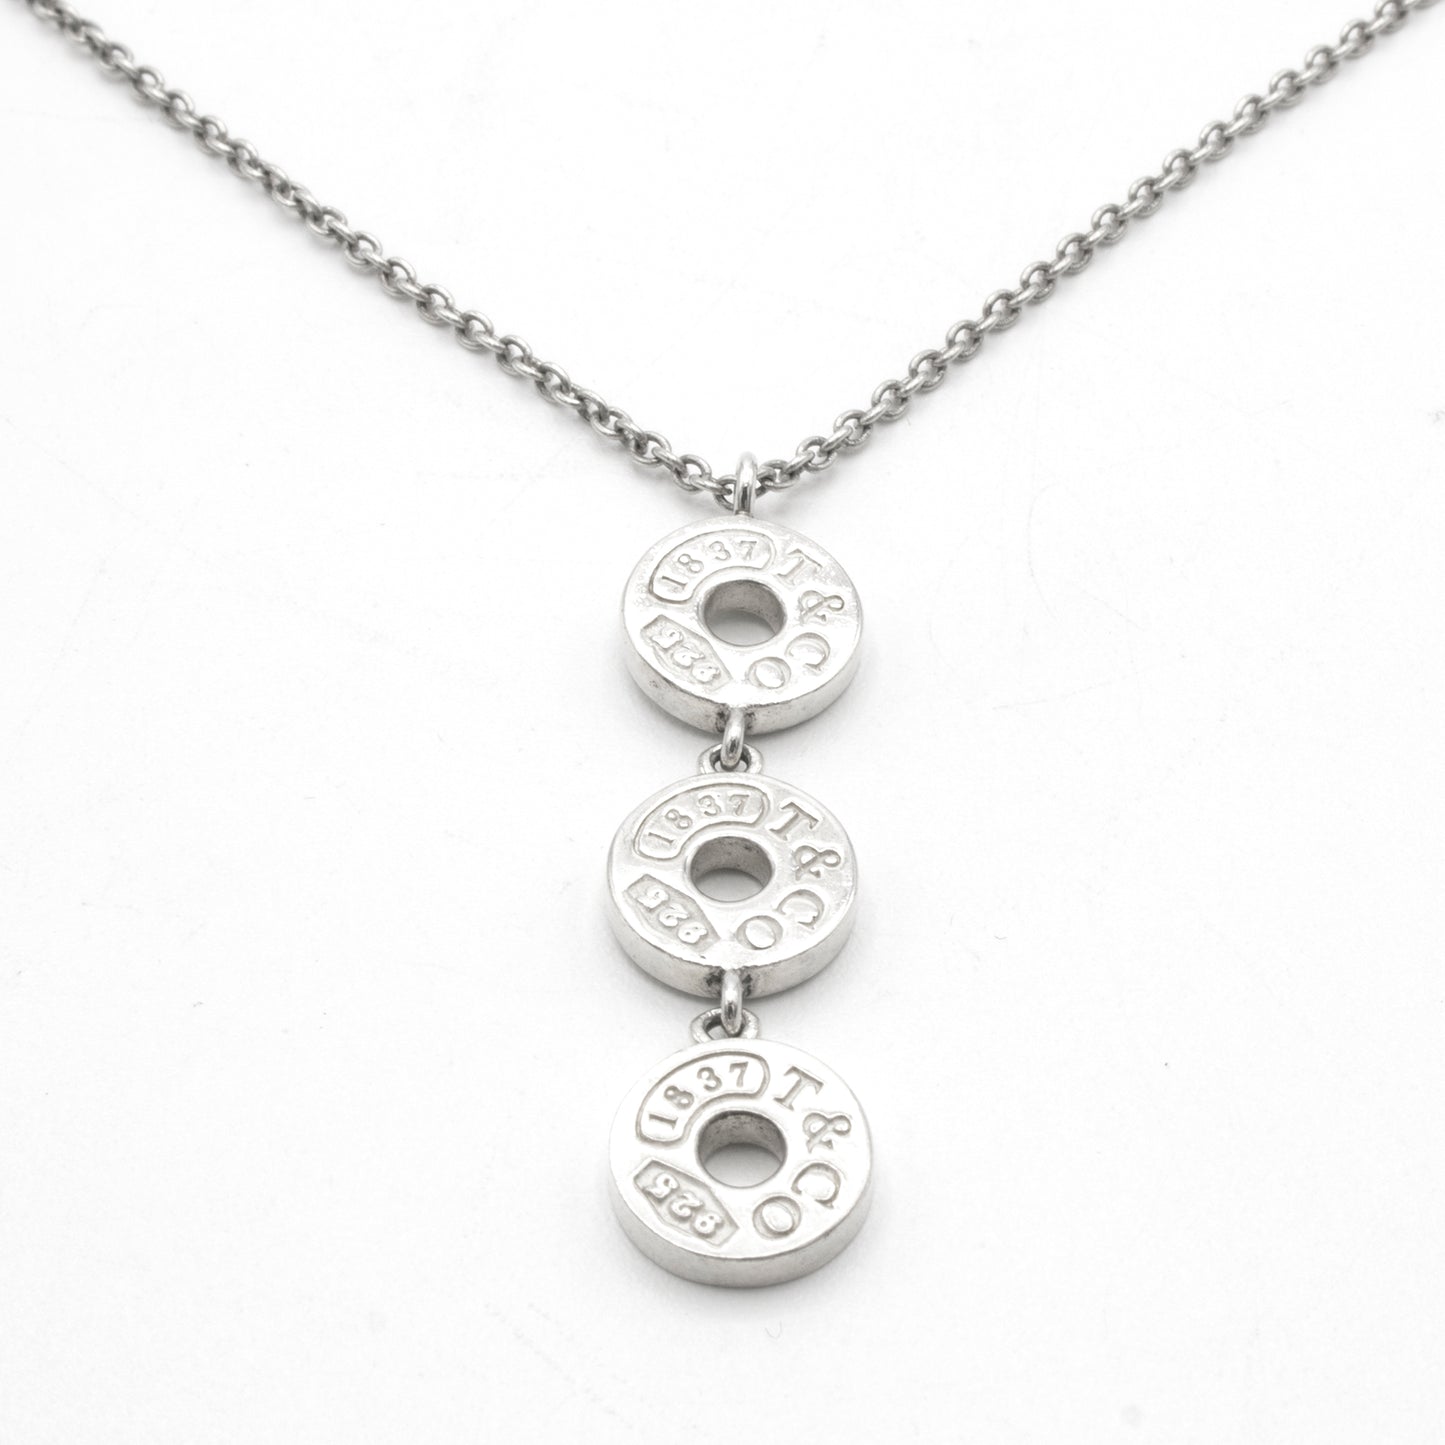 Tiffany & Co 1837 necklace